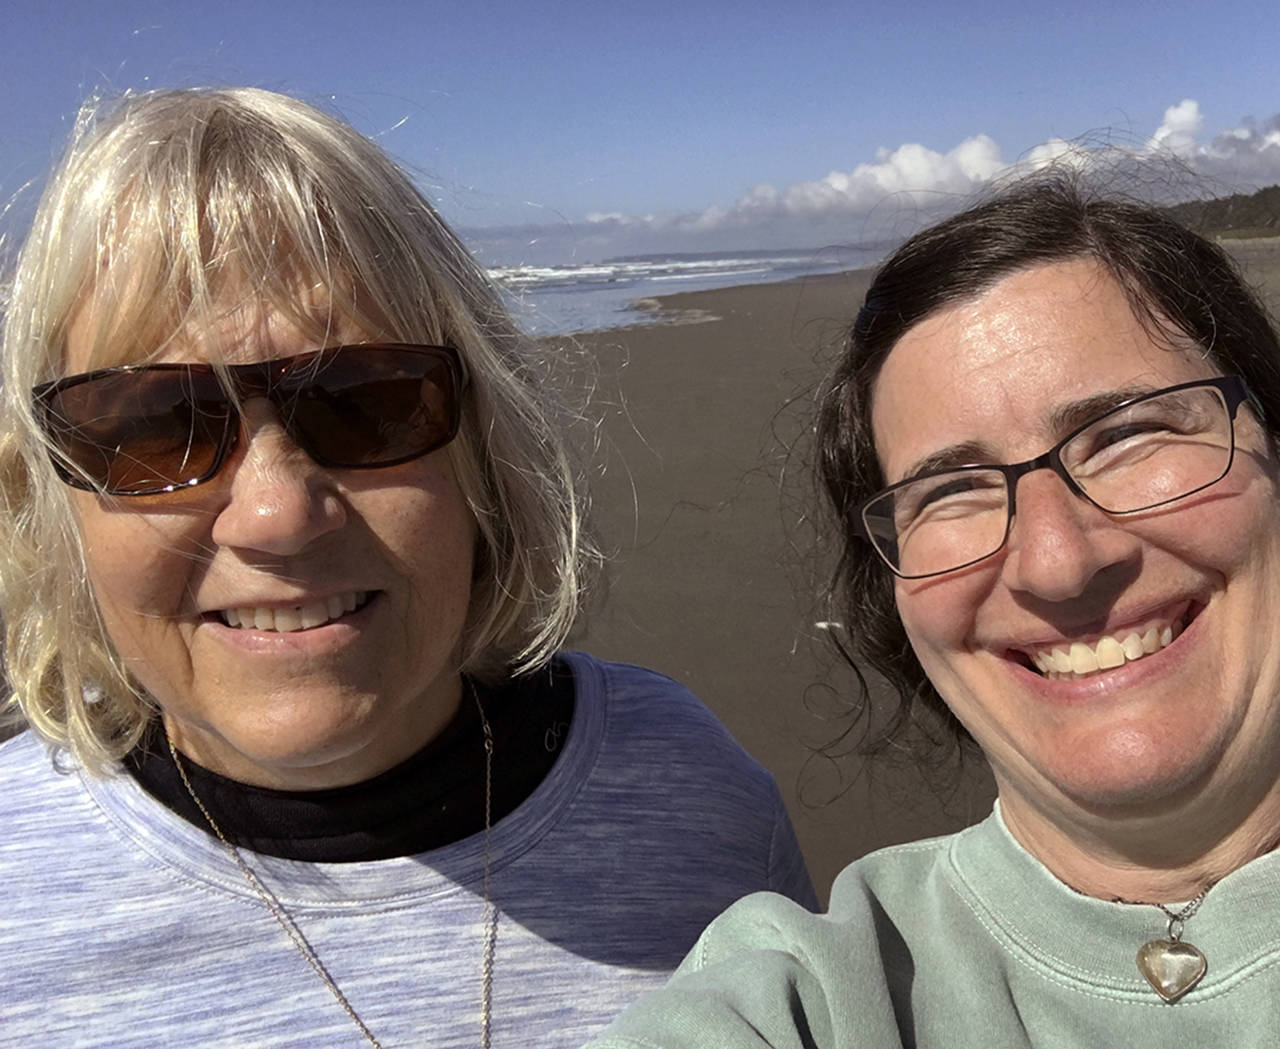 Selfie taken at Pacific Beach.